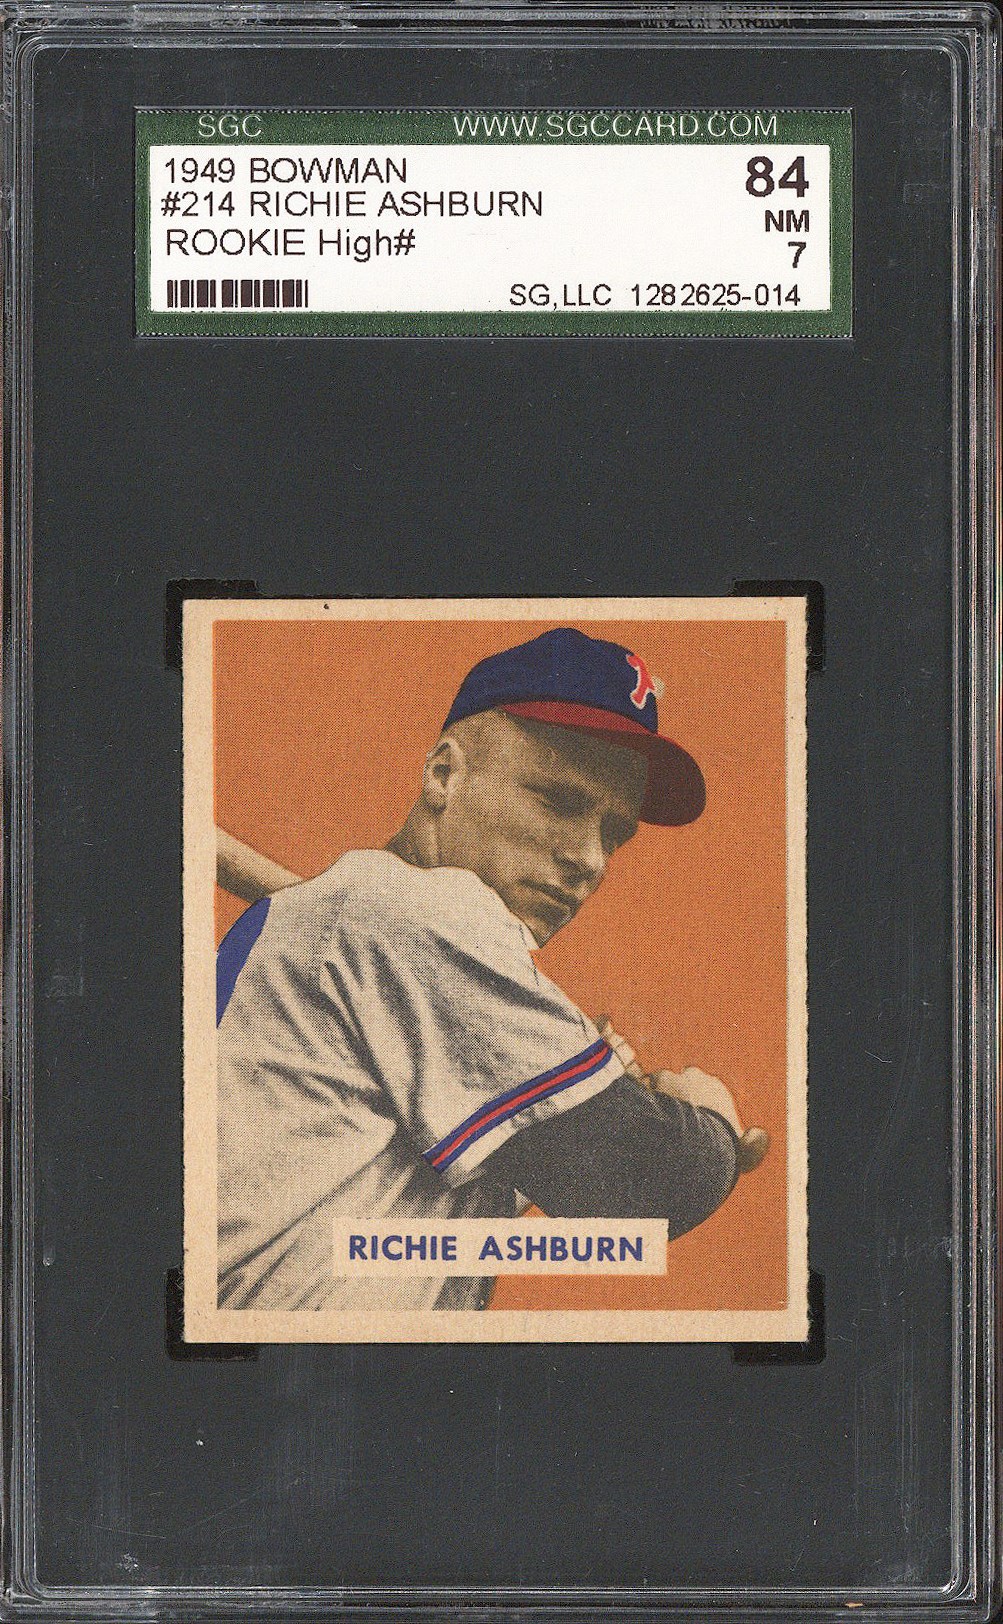 1949 Bowman #214 Richie Ashburn (HOF RC) - SGC NM 7